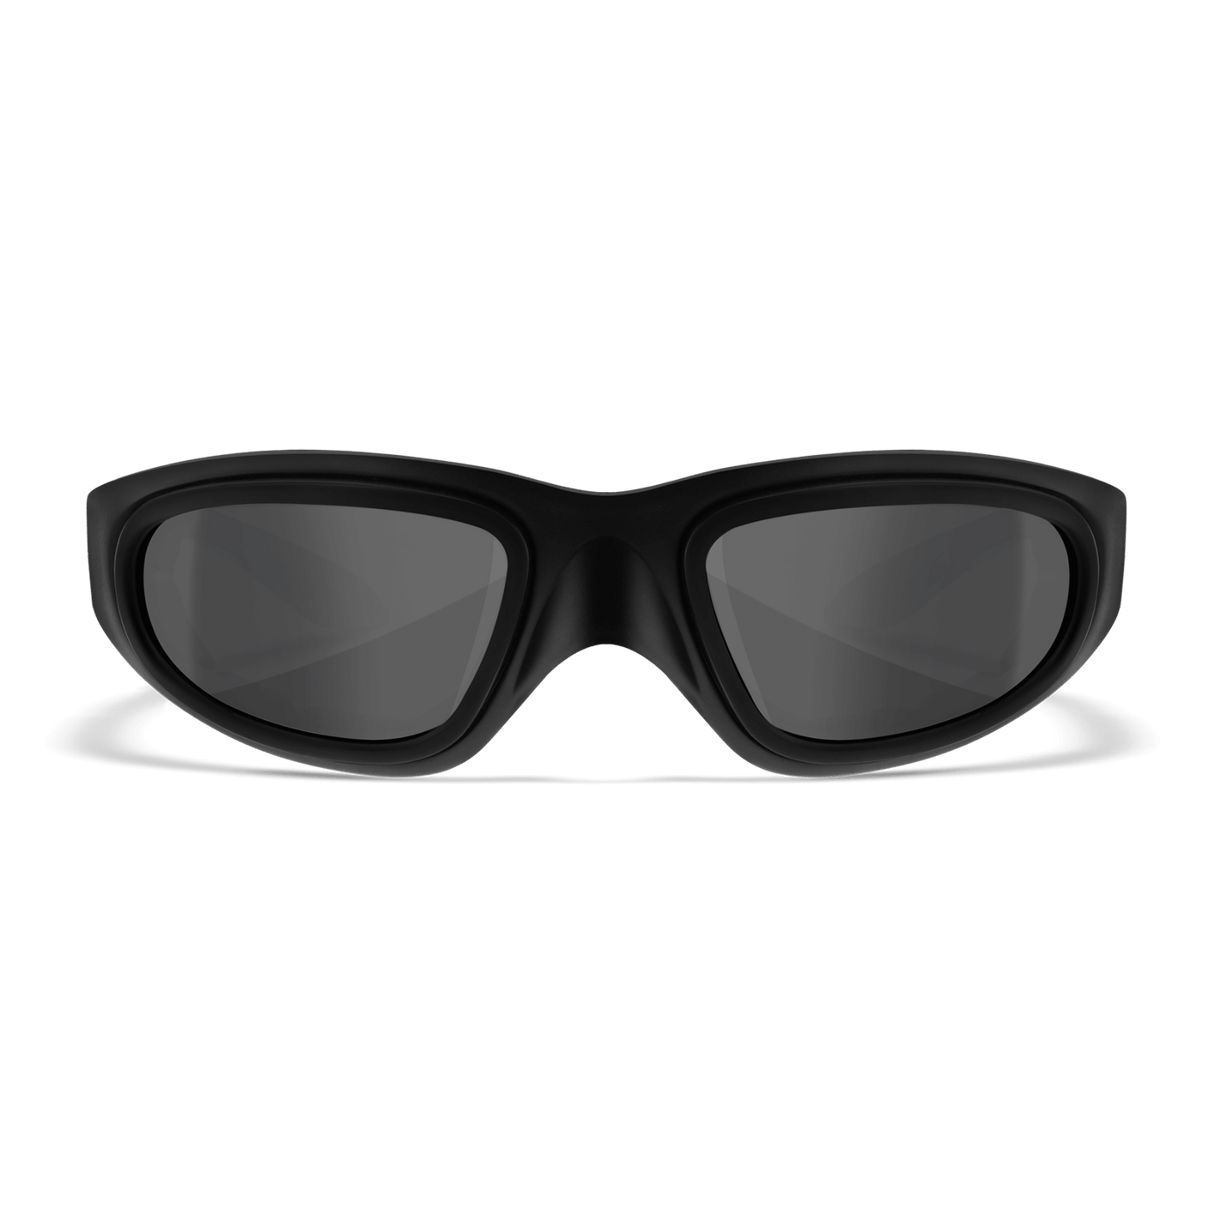 Wiley X SG-1 Goggles - Smoke Grey/Clear Lens - Matte Black Frame - Team Alpha